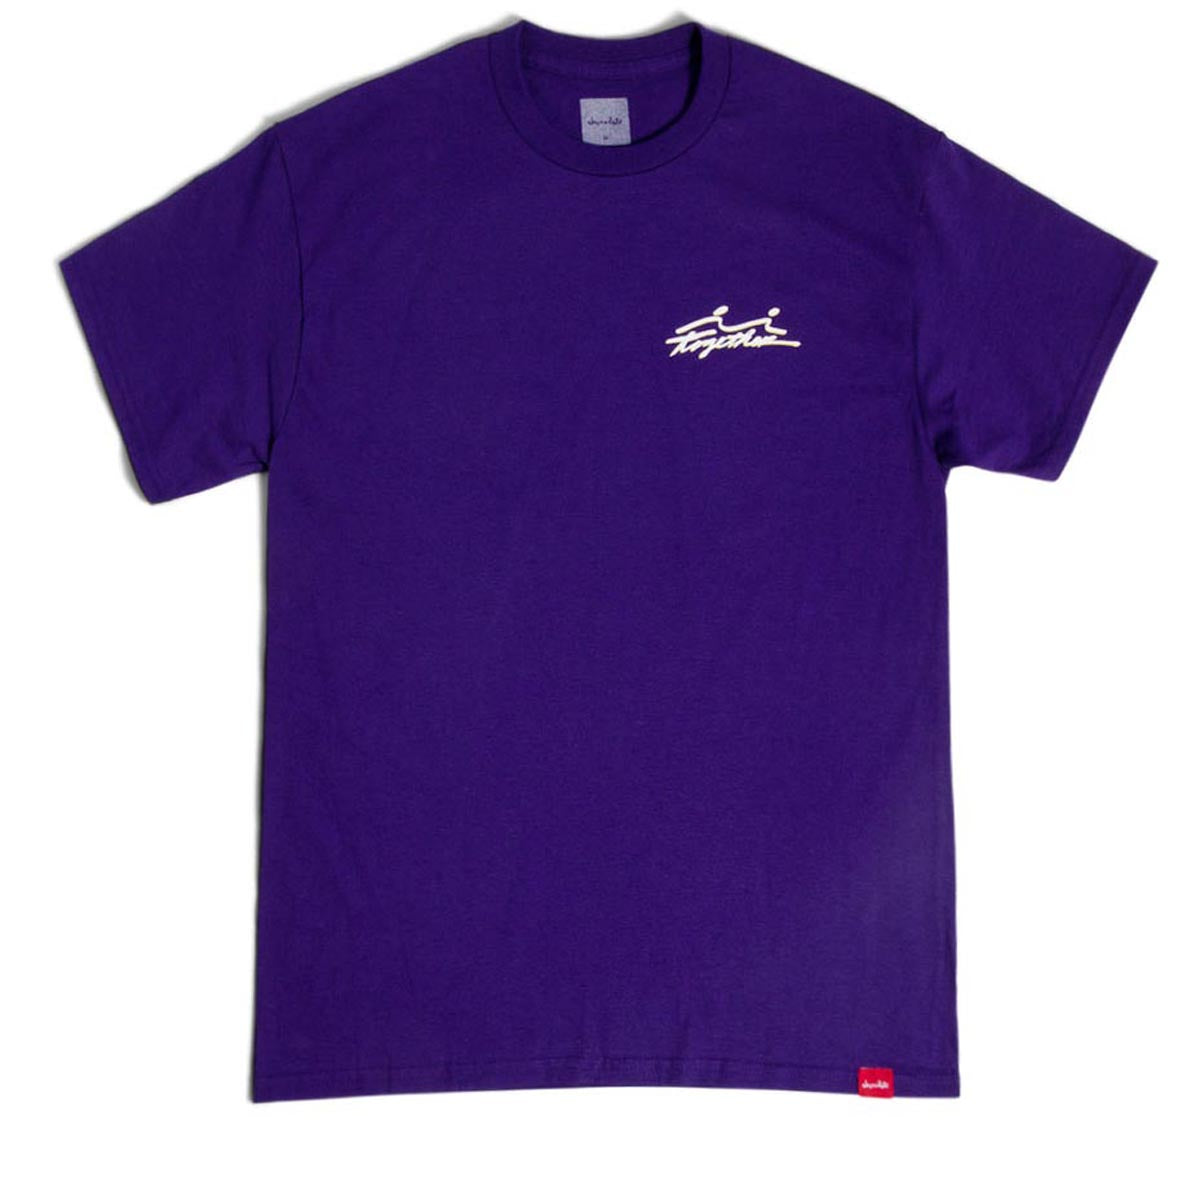 Chocolate Together T-Shirt - Purple image 2